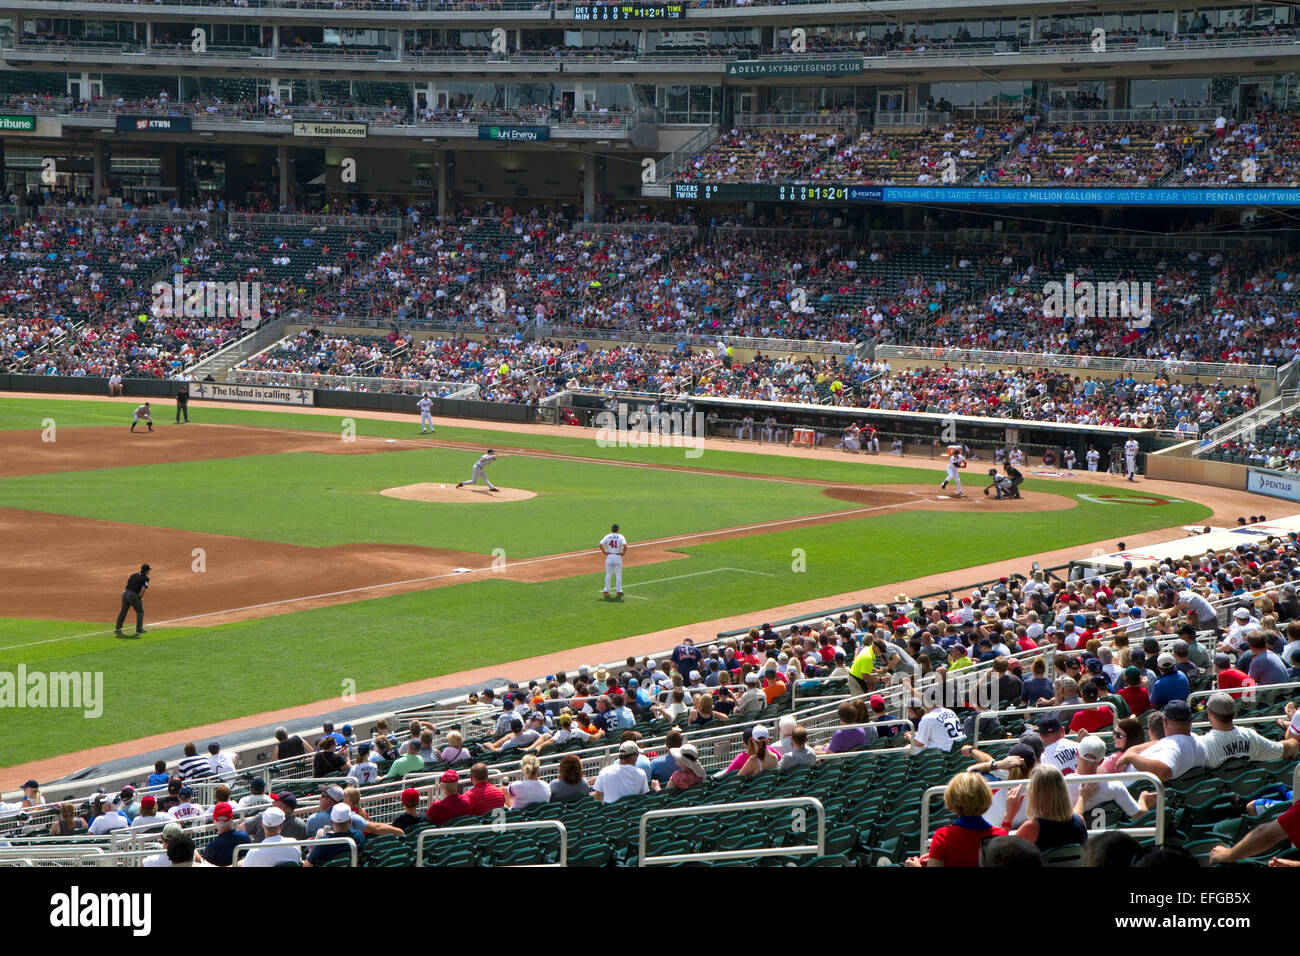 The baseball park at Target Field in Minneapolis, Minnesota, USA. Stock Photo